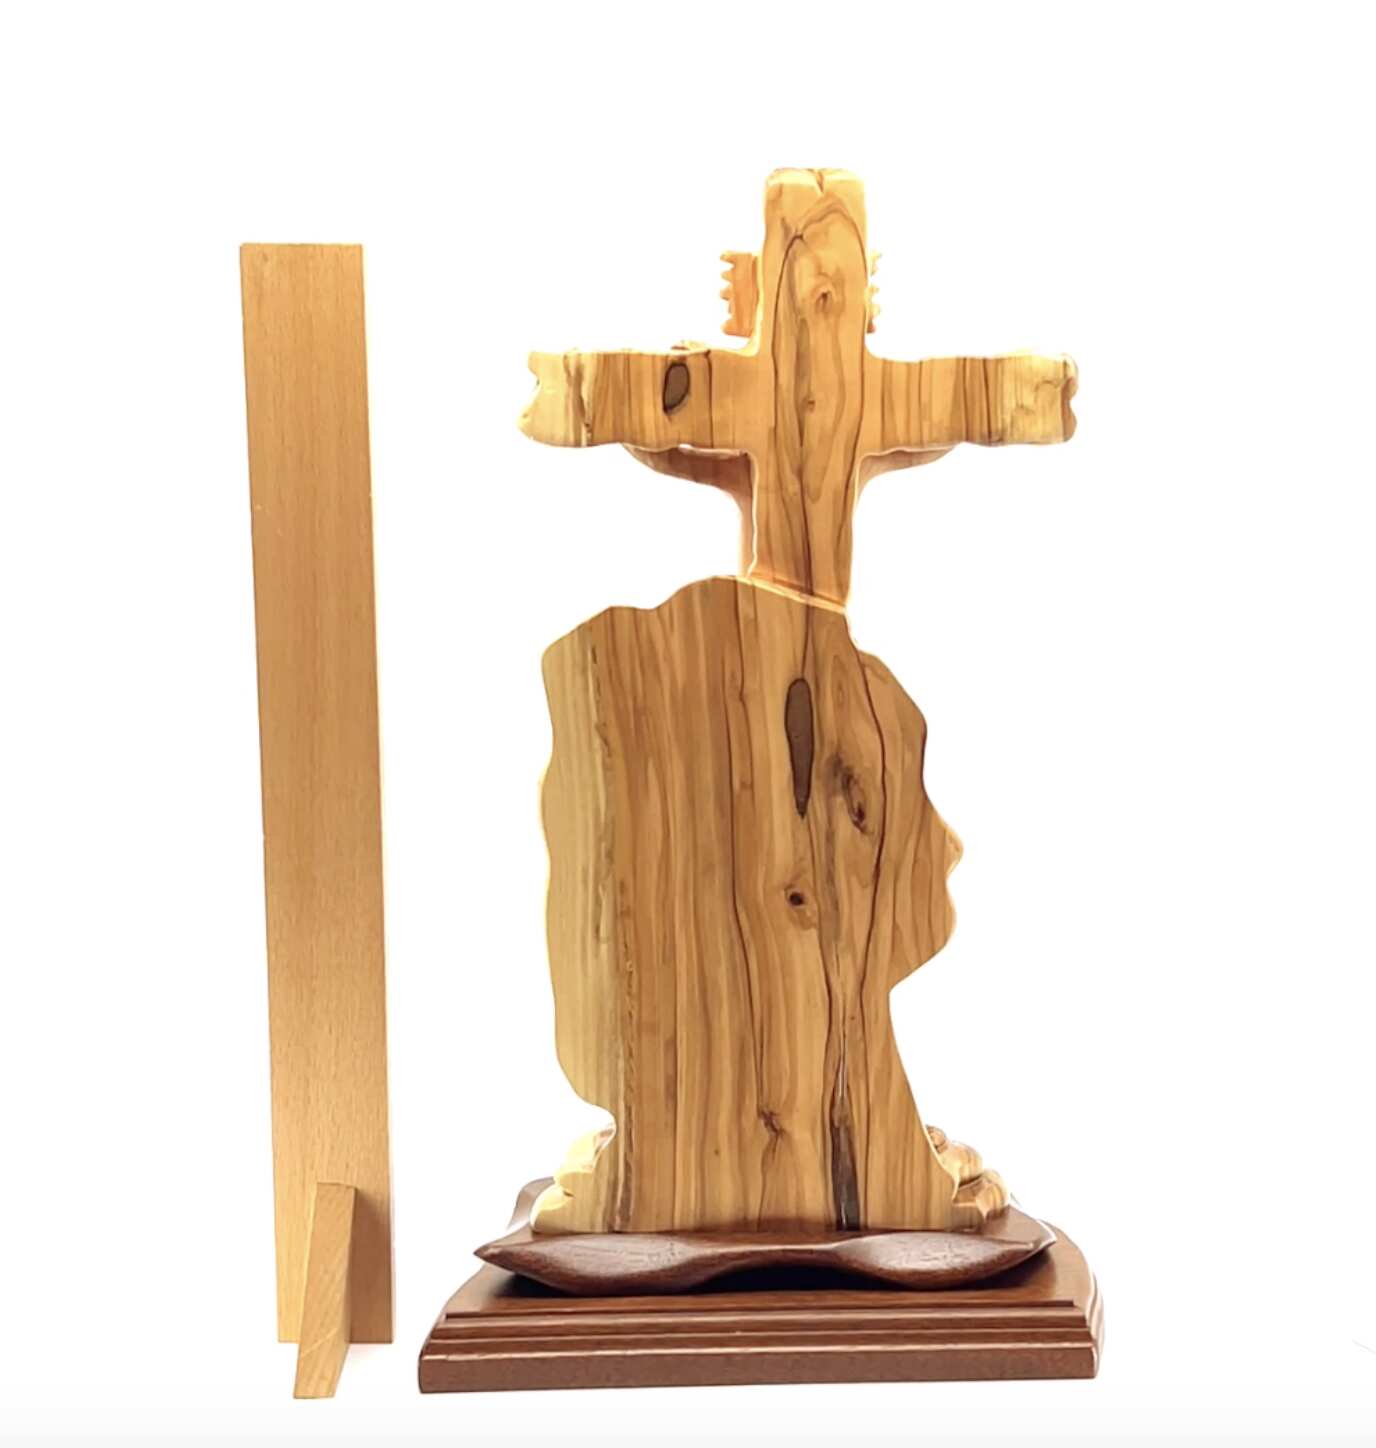 Jesus Christ "Crucified on Cross Masterpiece, 13.6" Engraved Scripture (John 3:16), Wood Sculpture